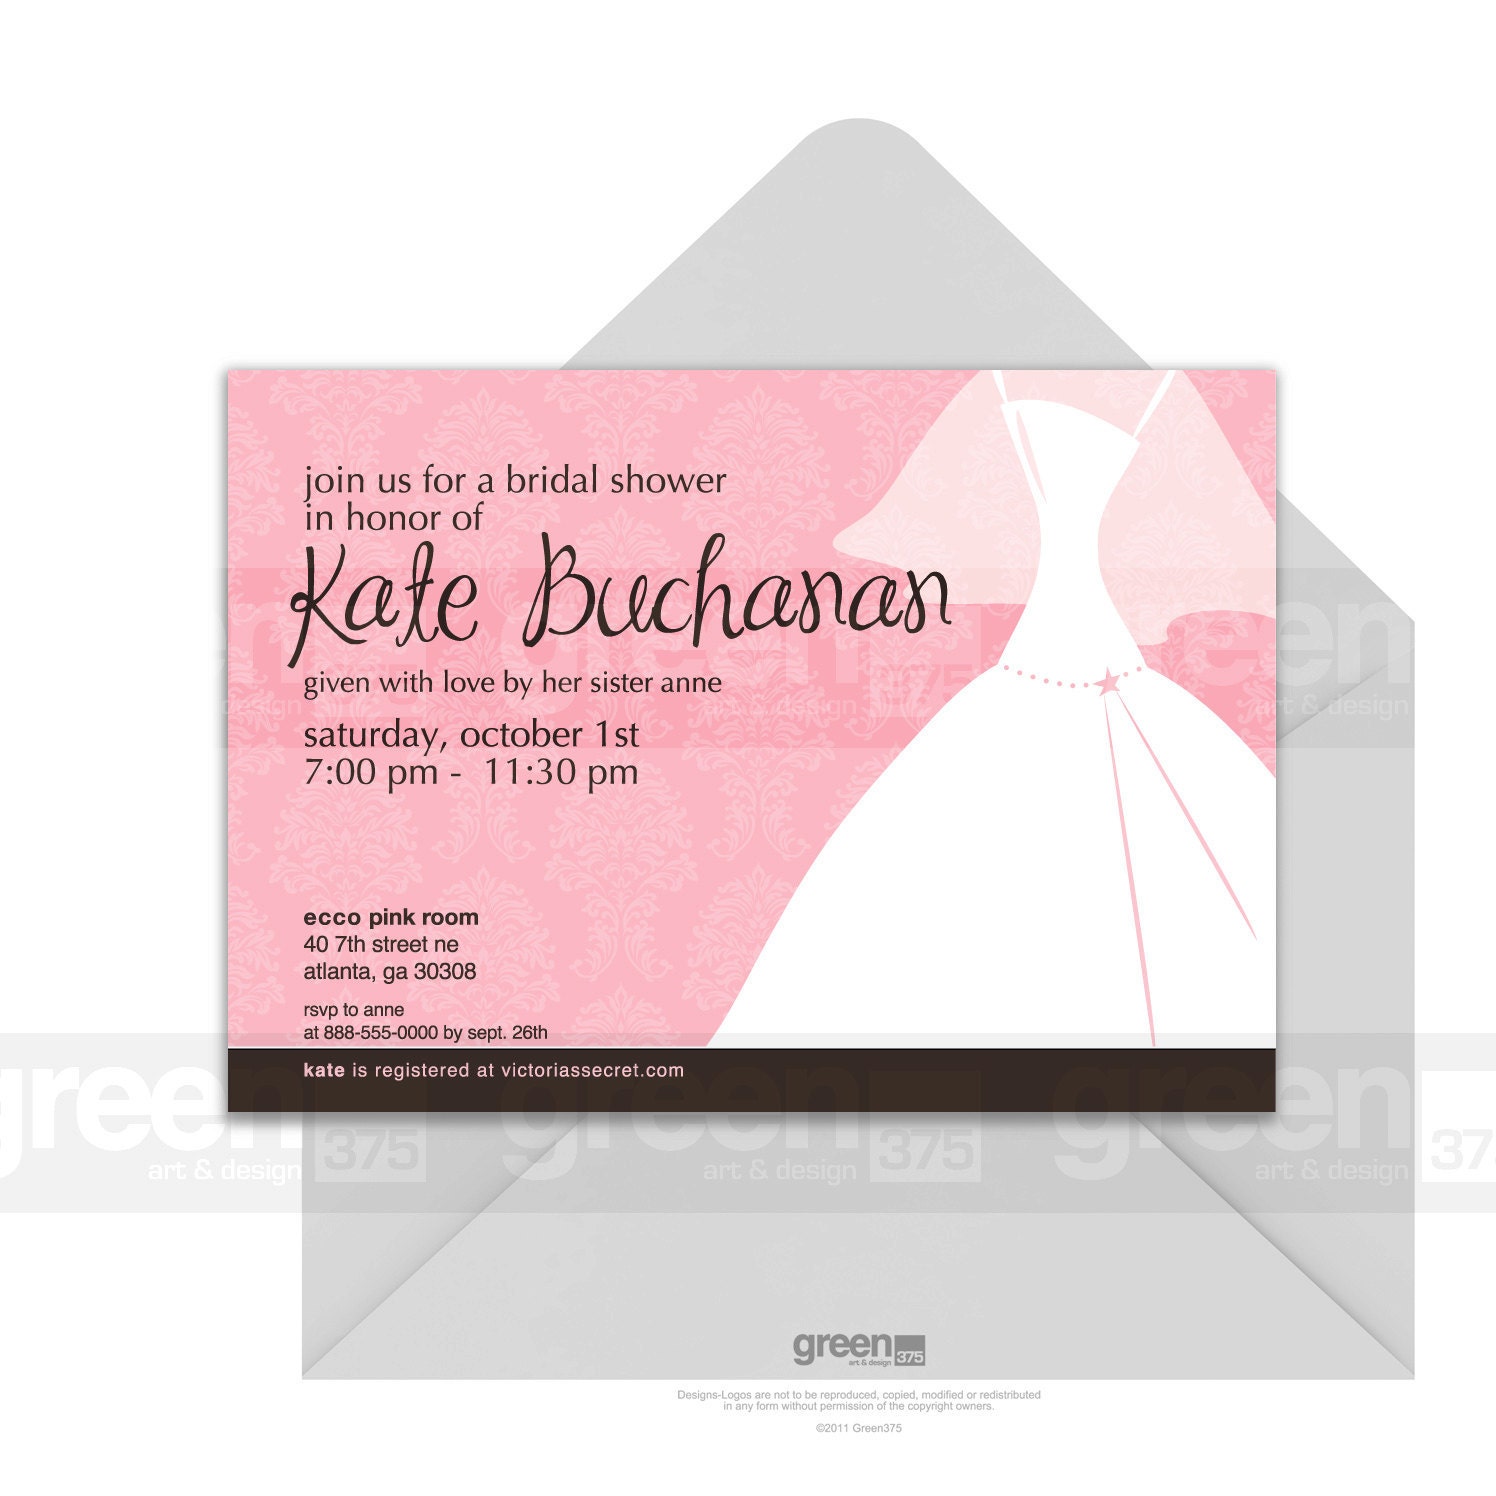 Bridal Wedding Shower invitations HQ Digital file JPG 5